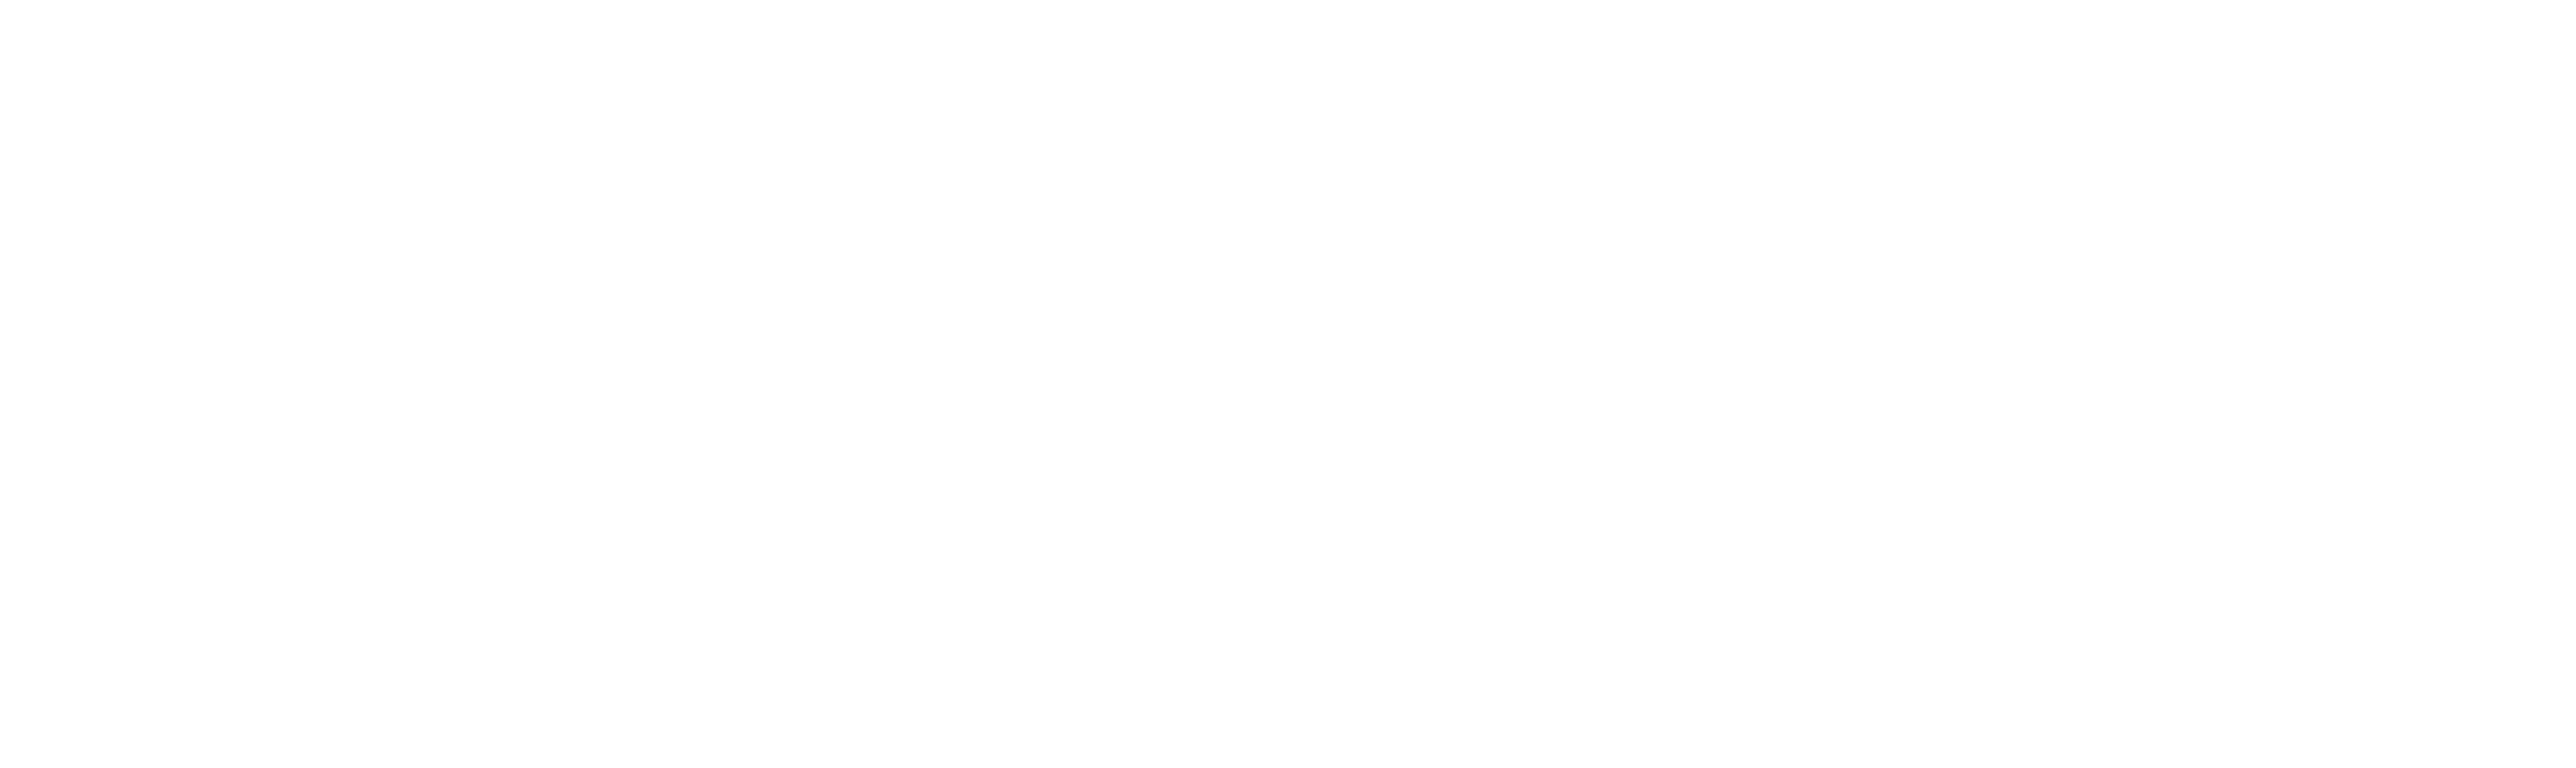 logo_negatiu_horitzontal_2020_español